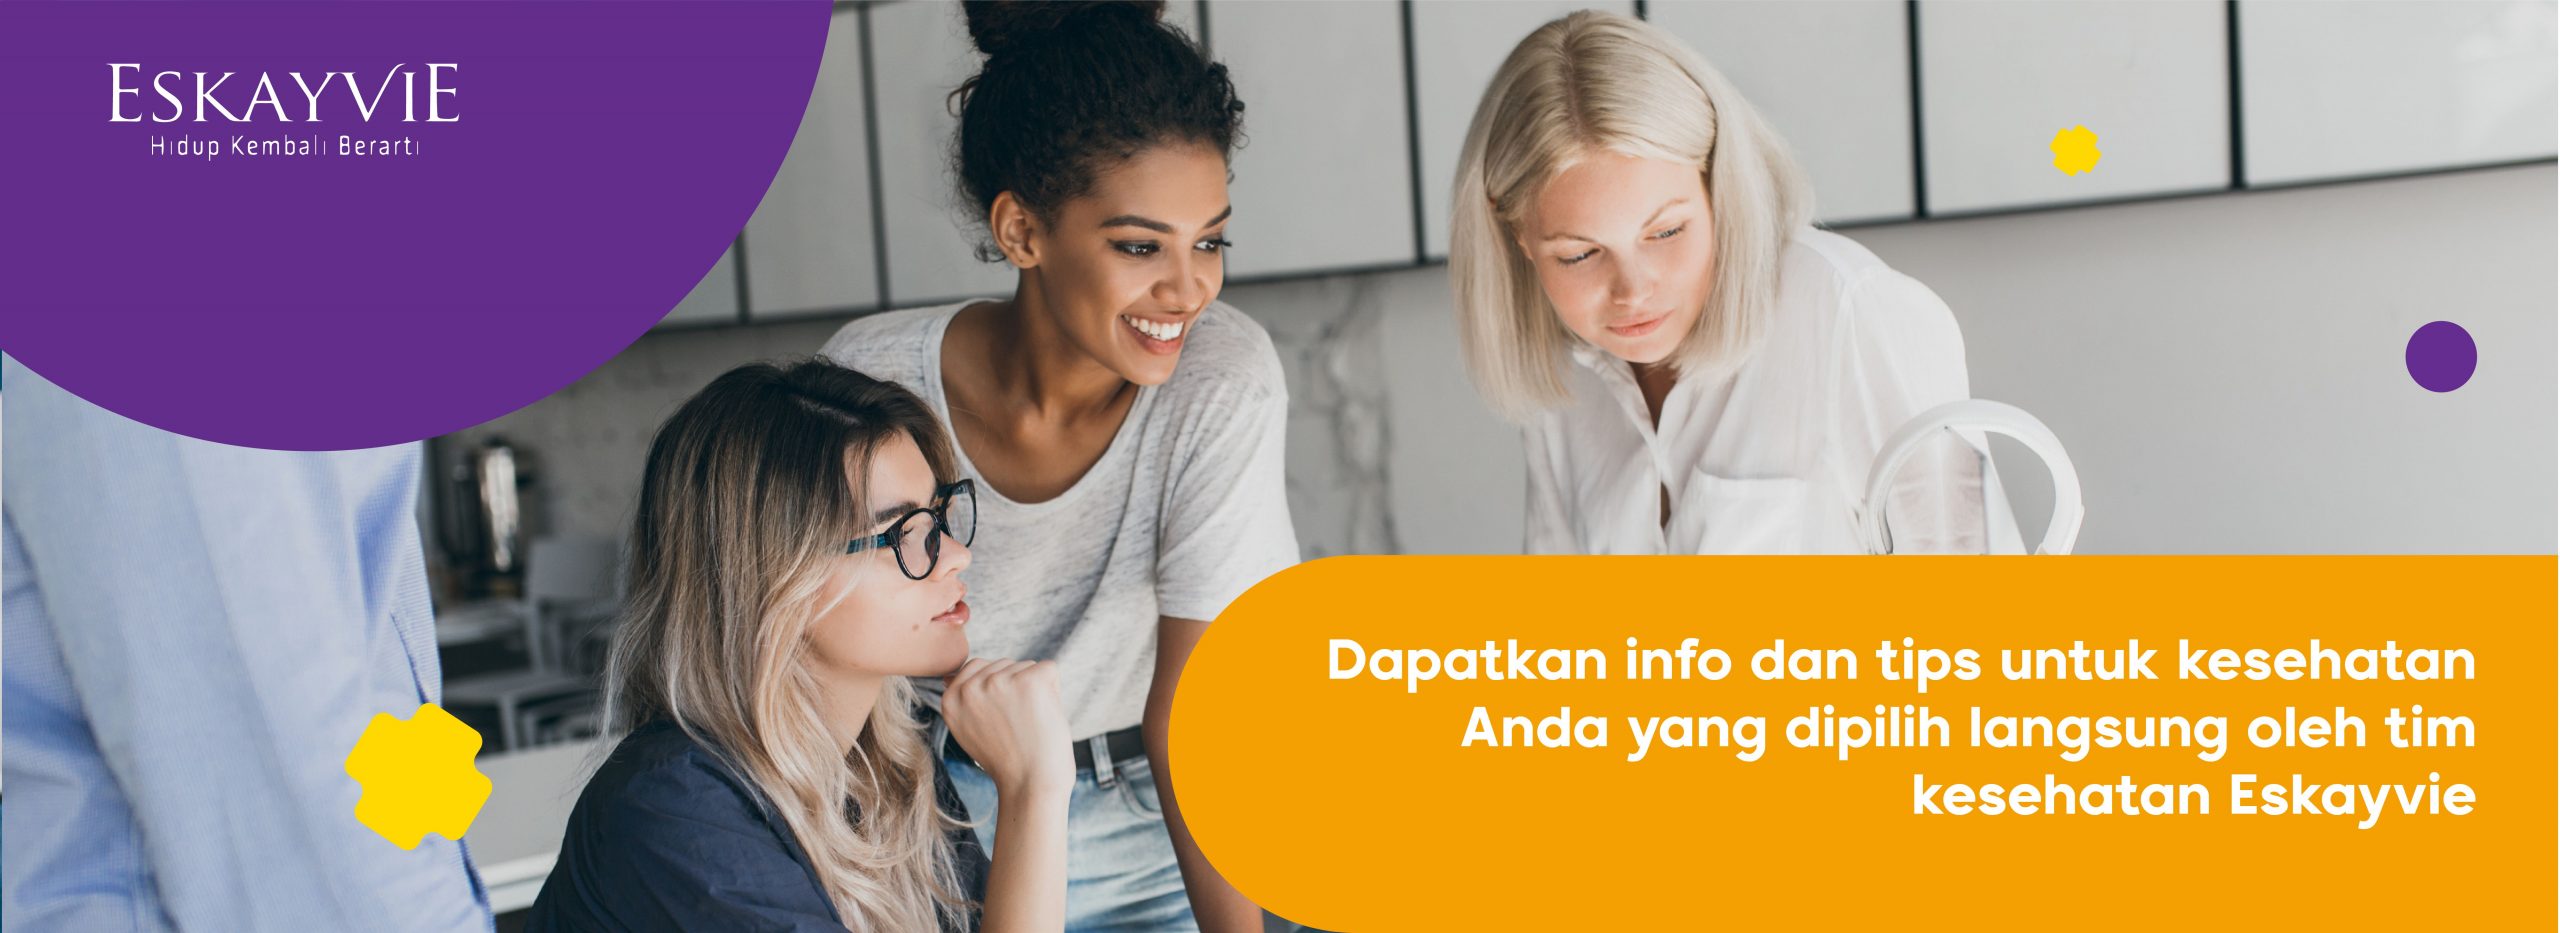 banner info dan tips eskayvie indonesia